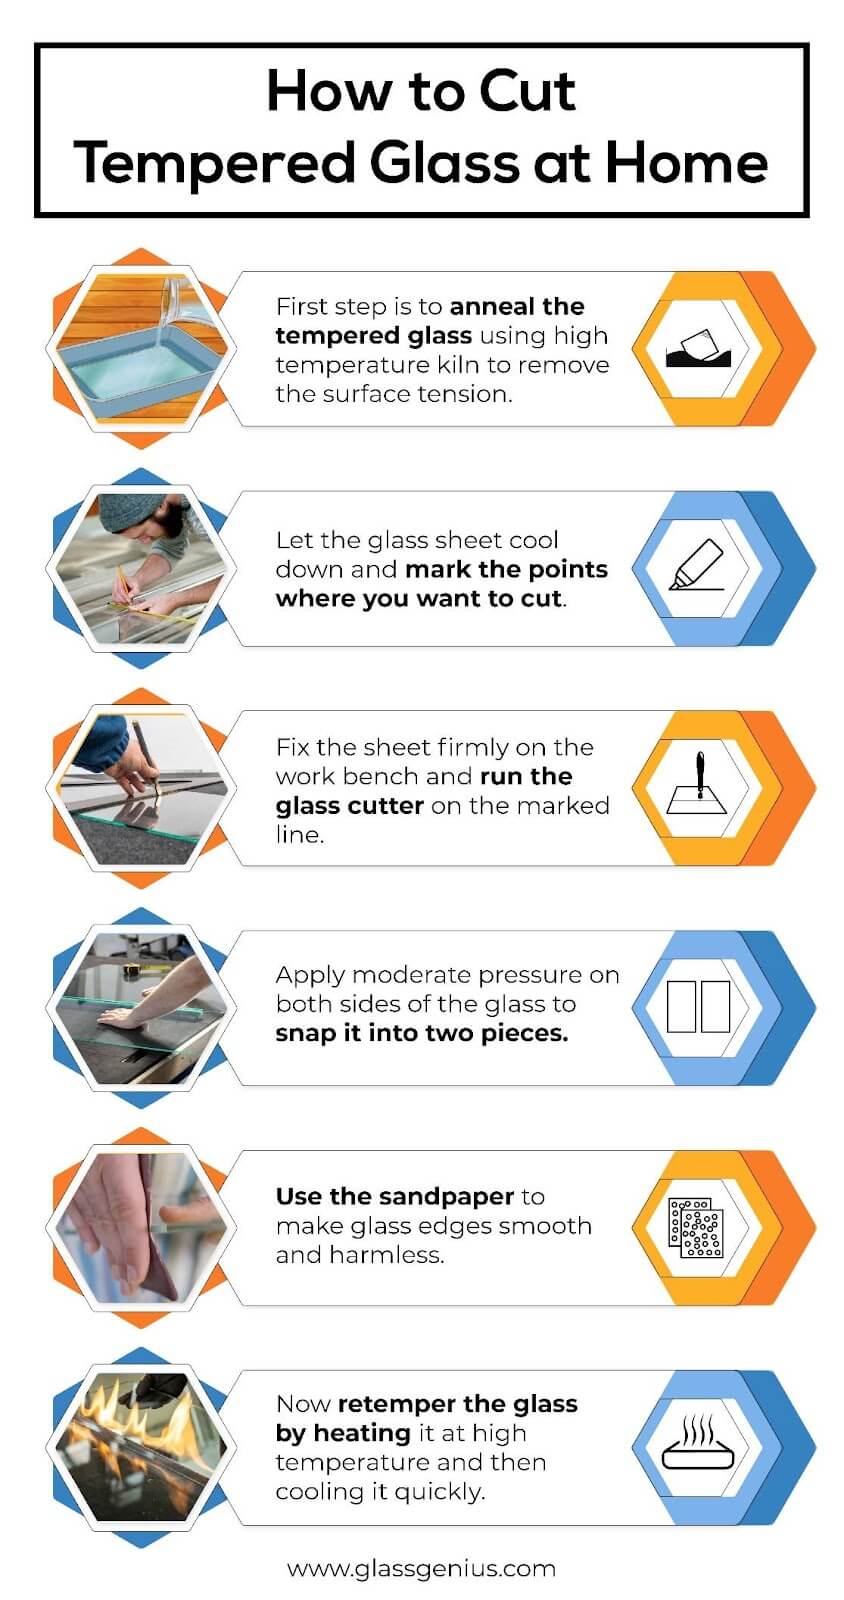 https://www.glassgenius.com/blog/wp-content/uploads/2021/10/how-to-cut-tempered-glasss-al-home.jpg